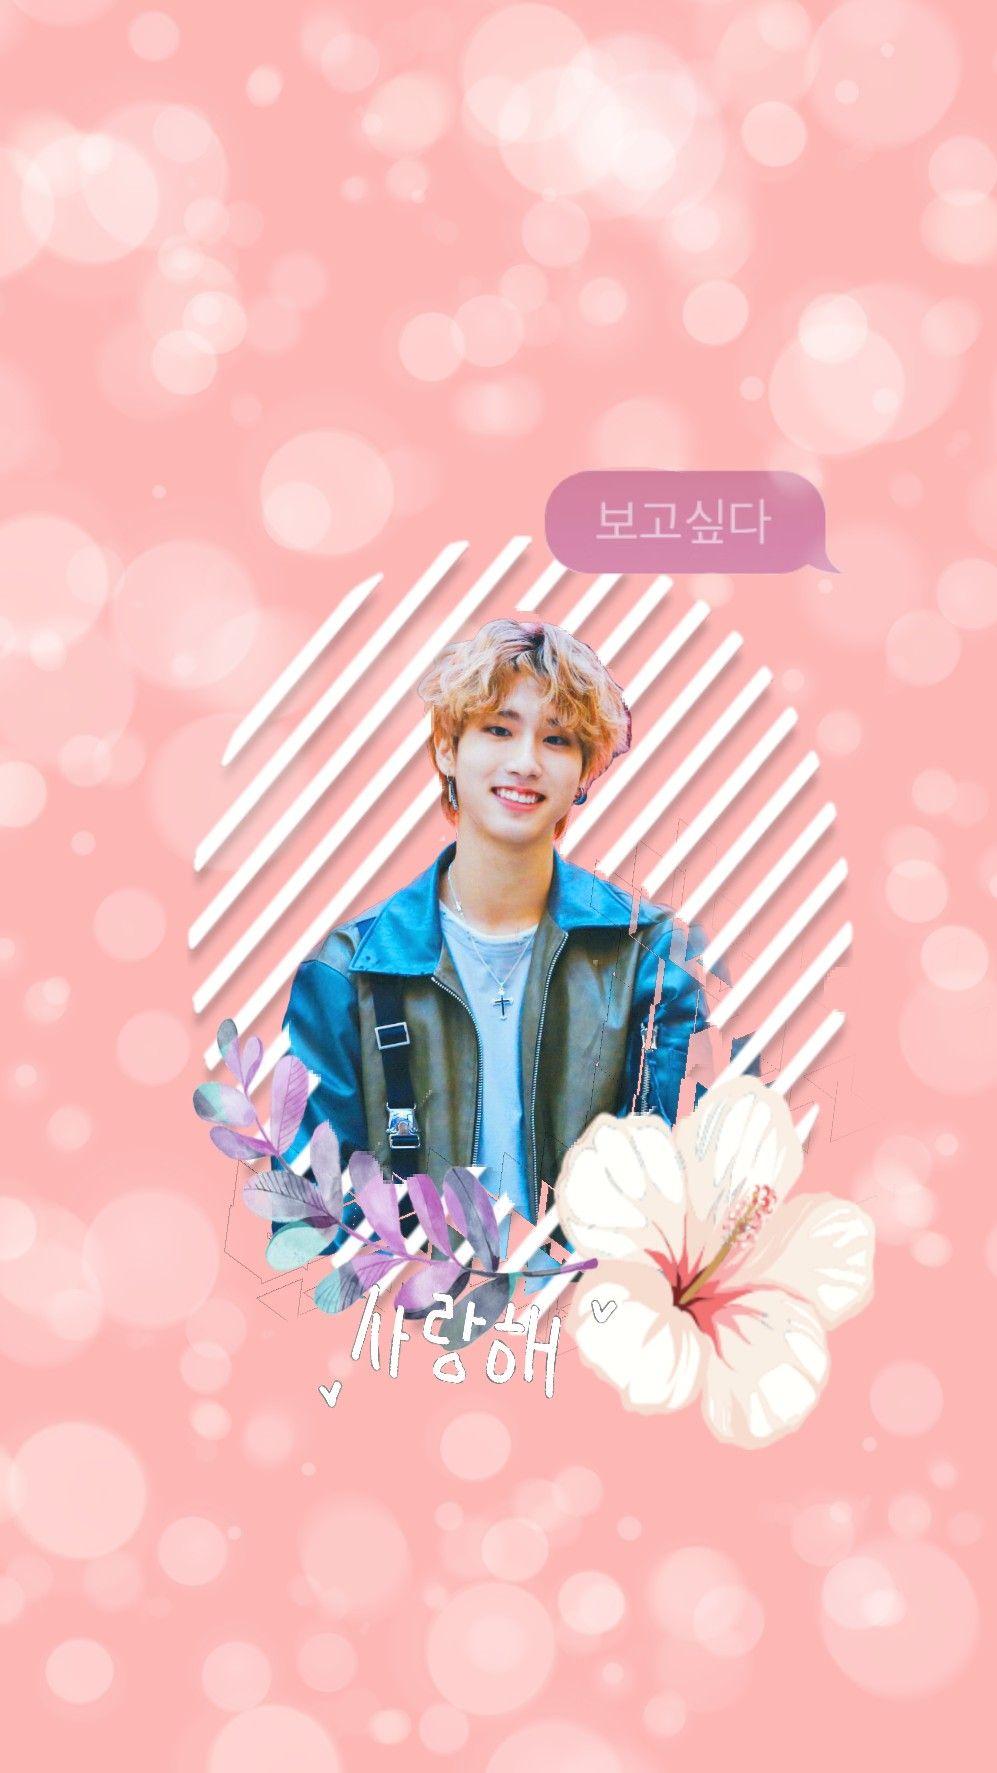 Han Jisung Cute Stray kids wallpaper background iphone samsung lg